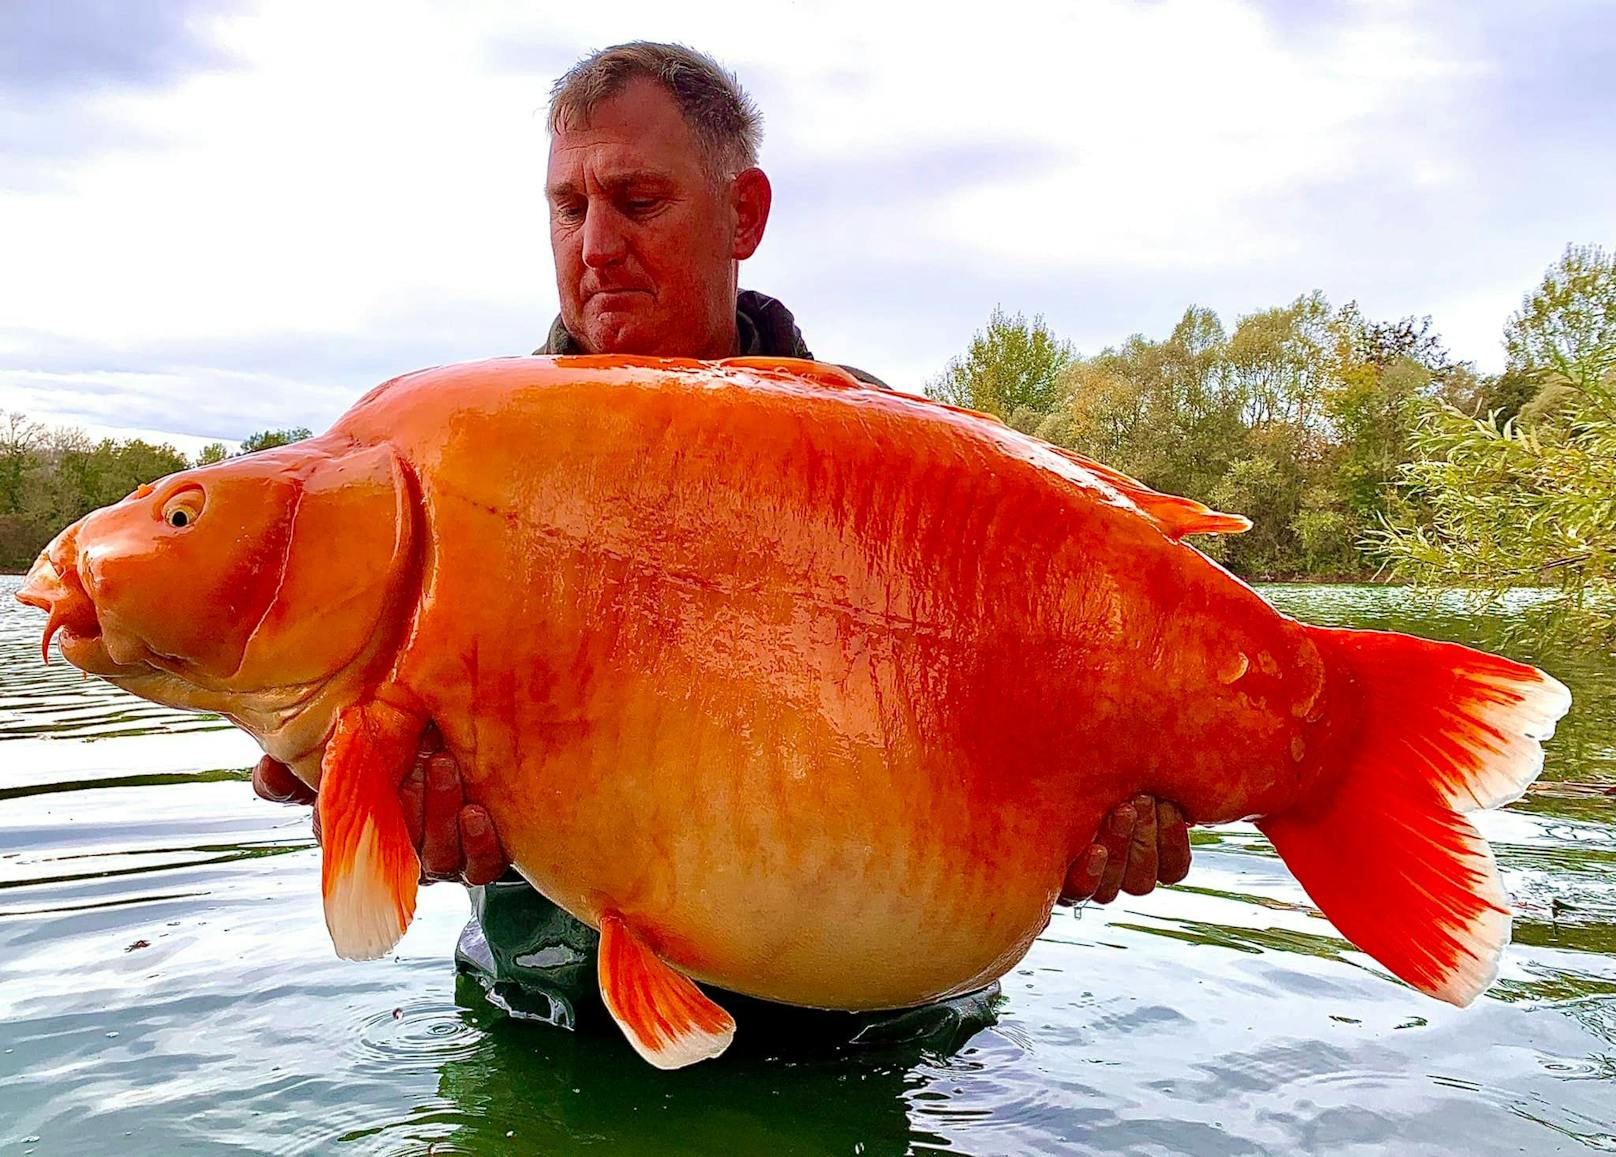 32-Kilogramm-Goldfisch heißt "Karotte"